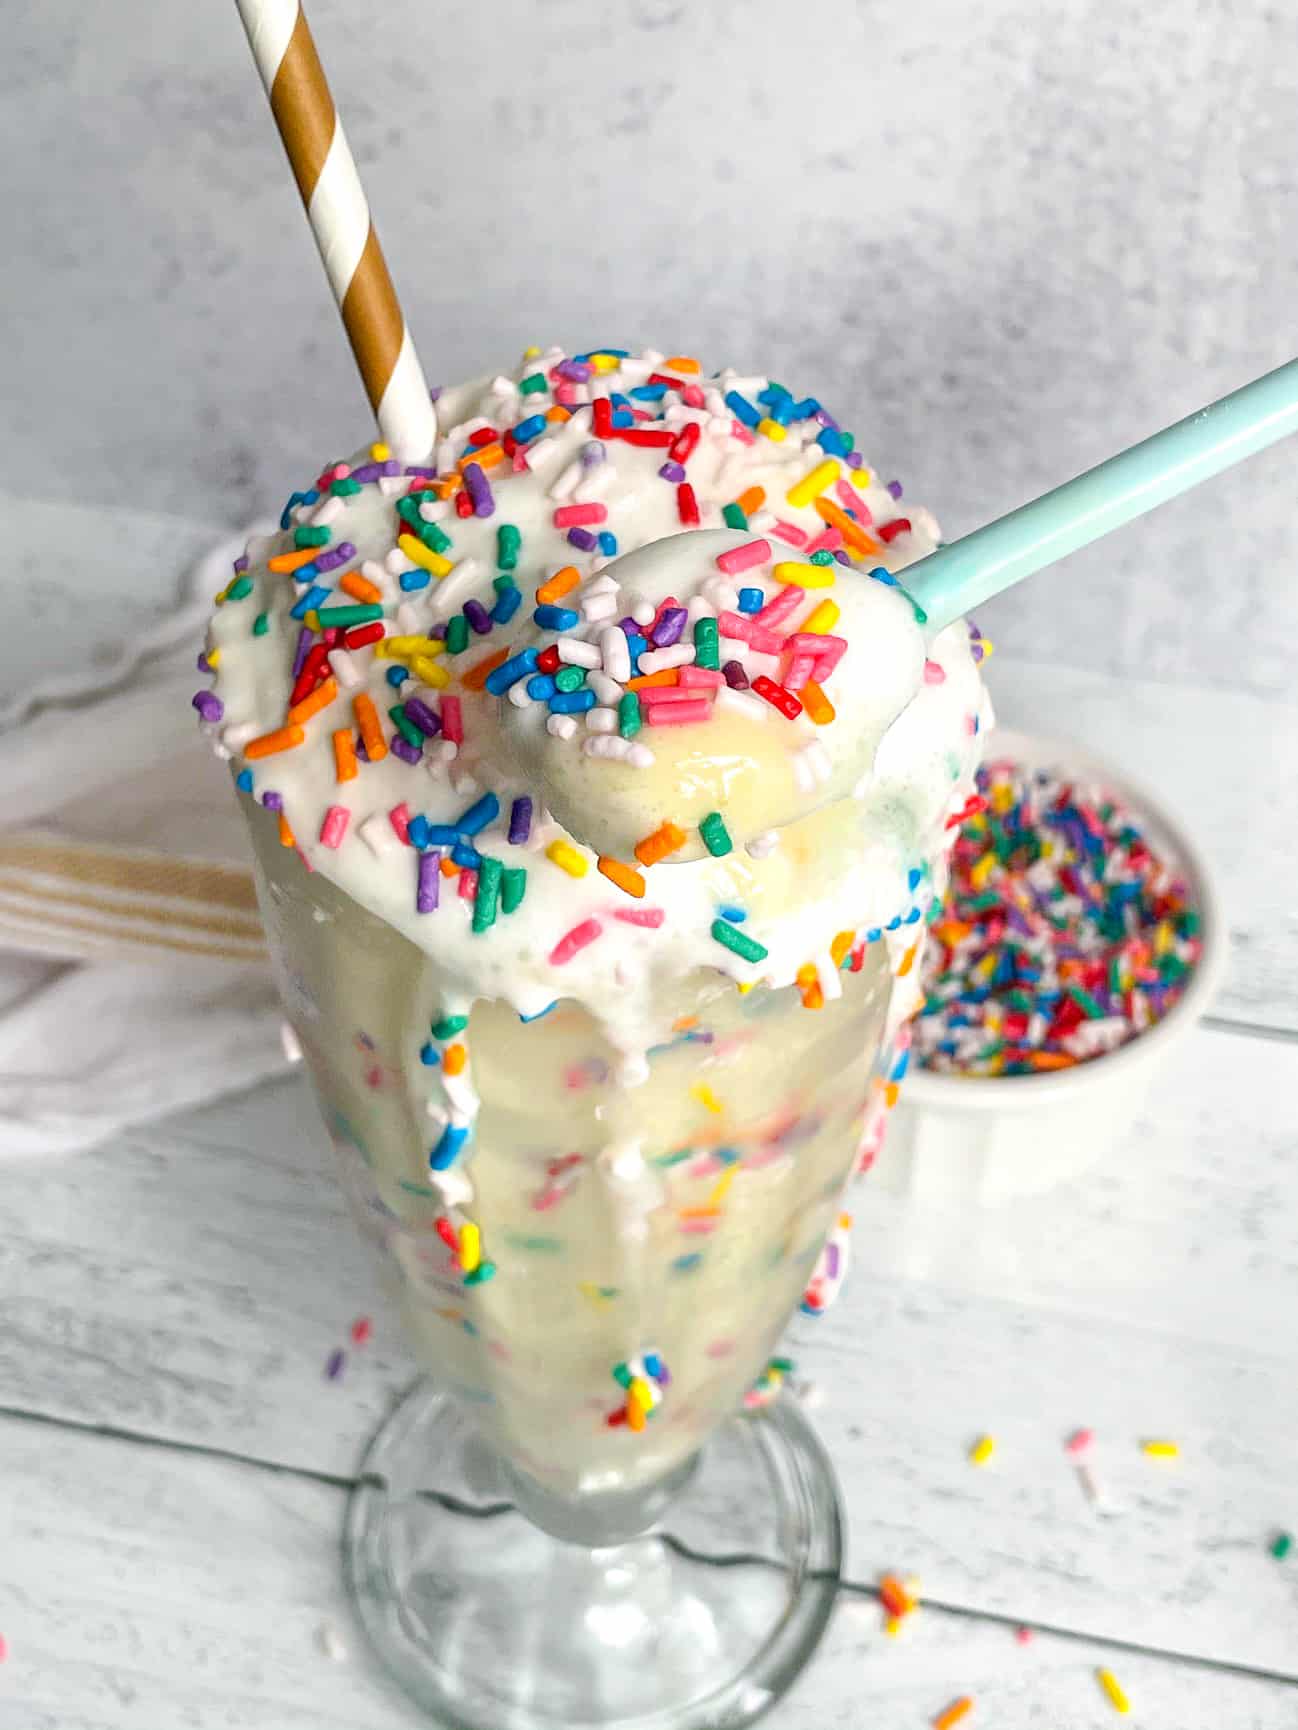 Birthday Cake Protein Milkshake with rainbow sprinkles and a paper straw